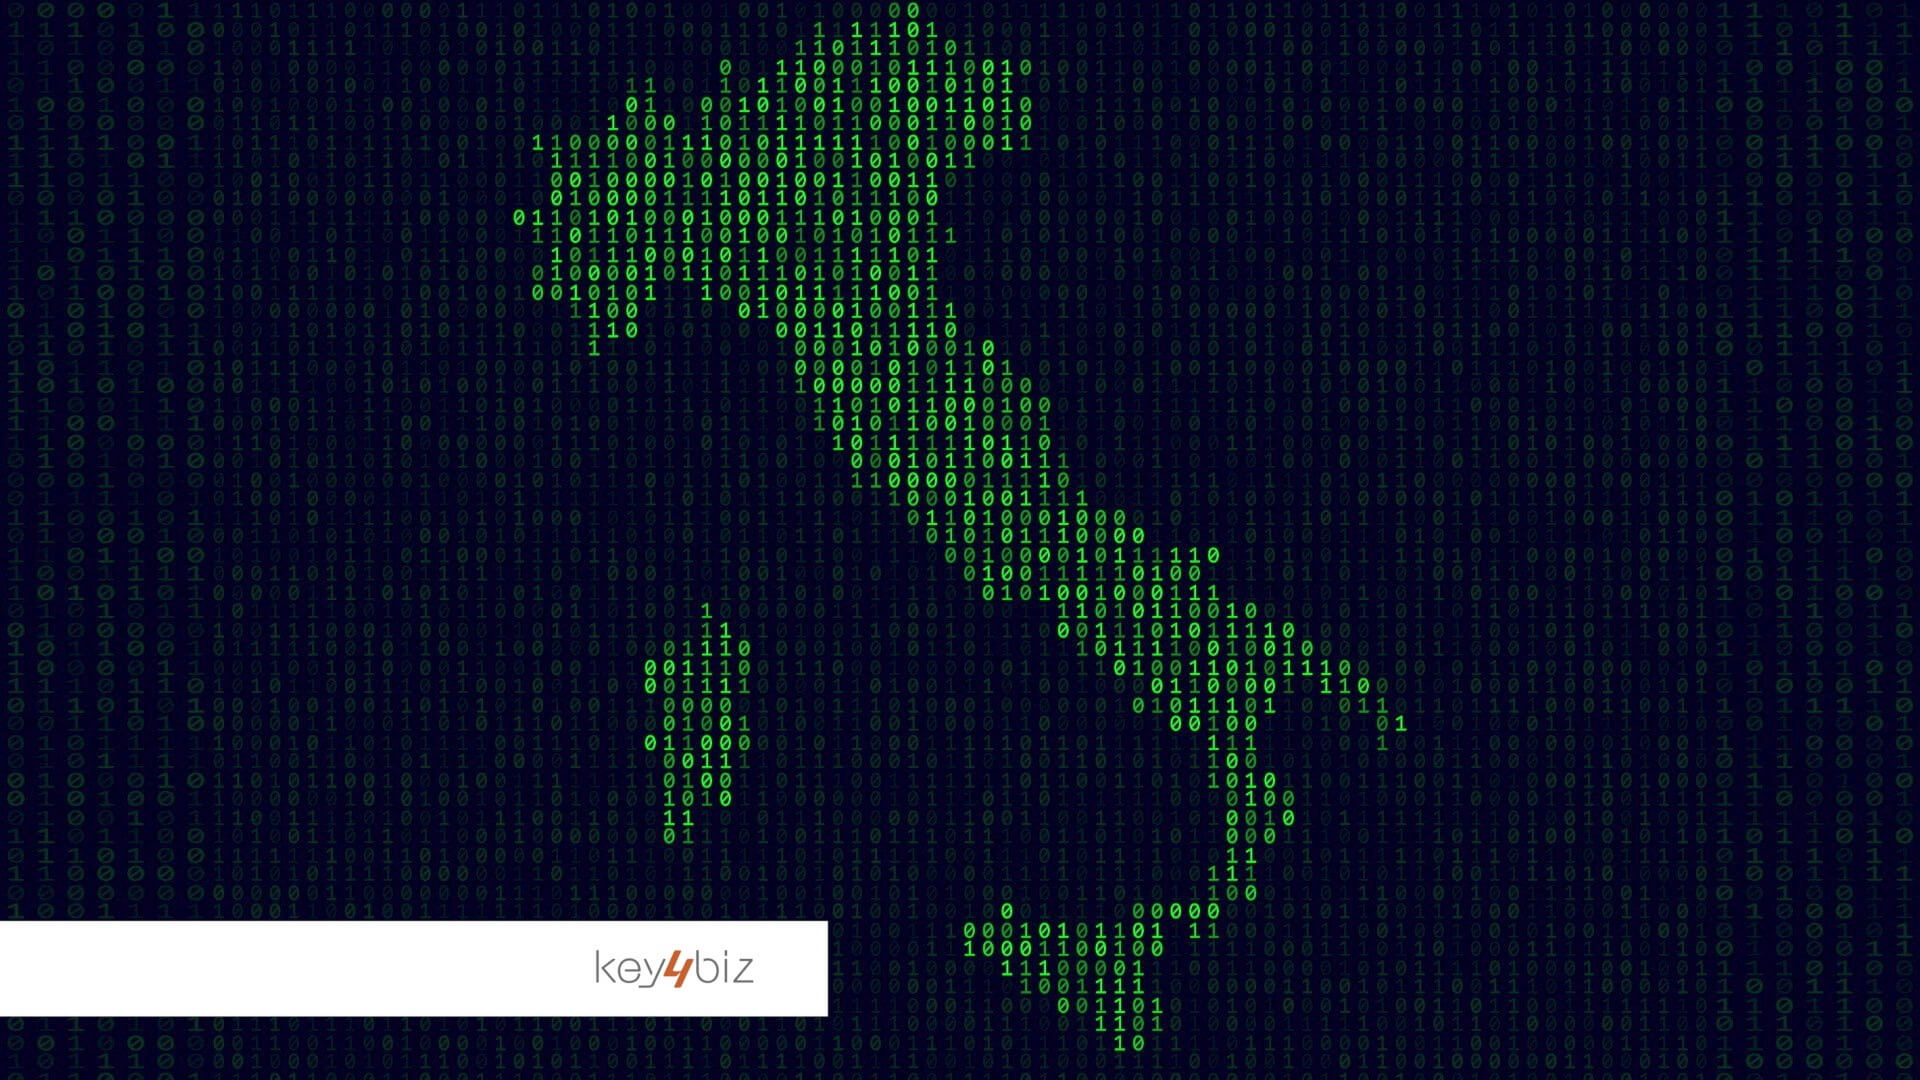 italia_big_data_dati_cybersecurity_sicurezza_informatica